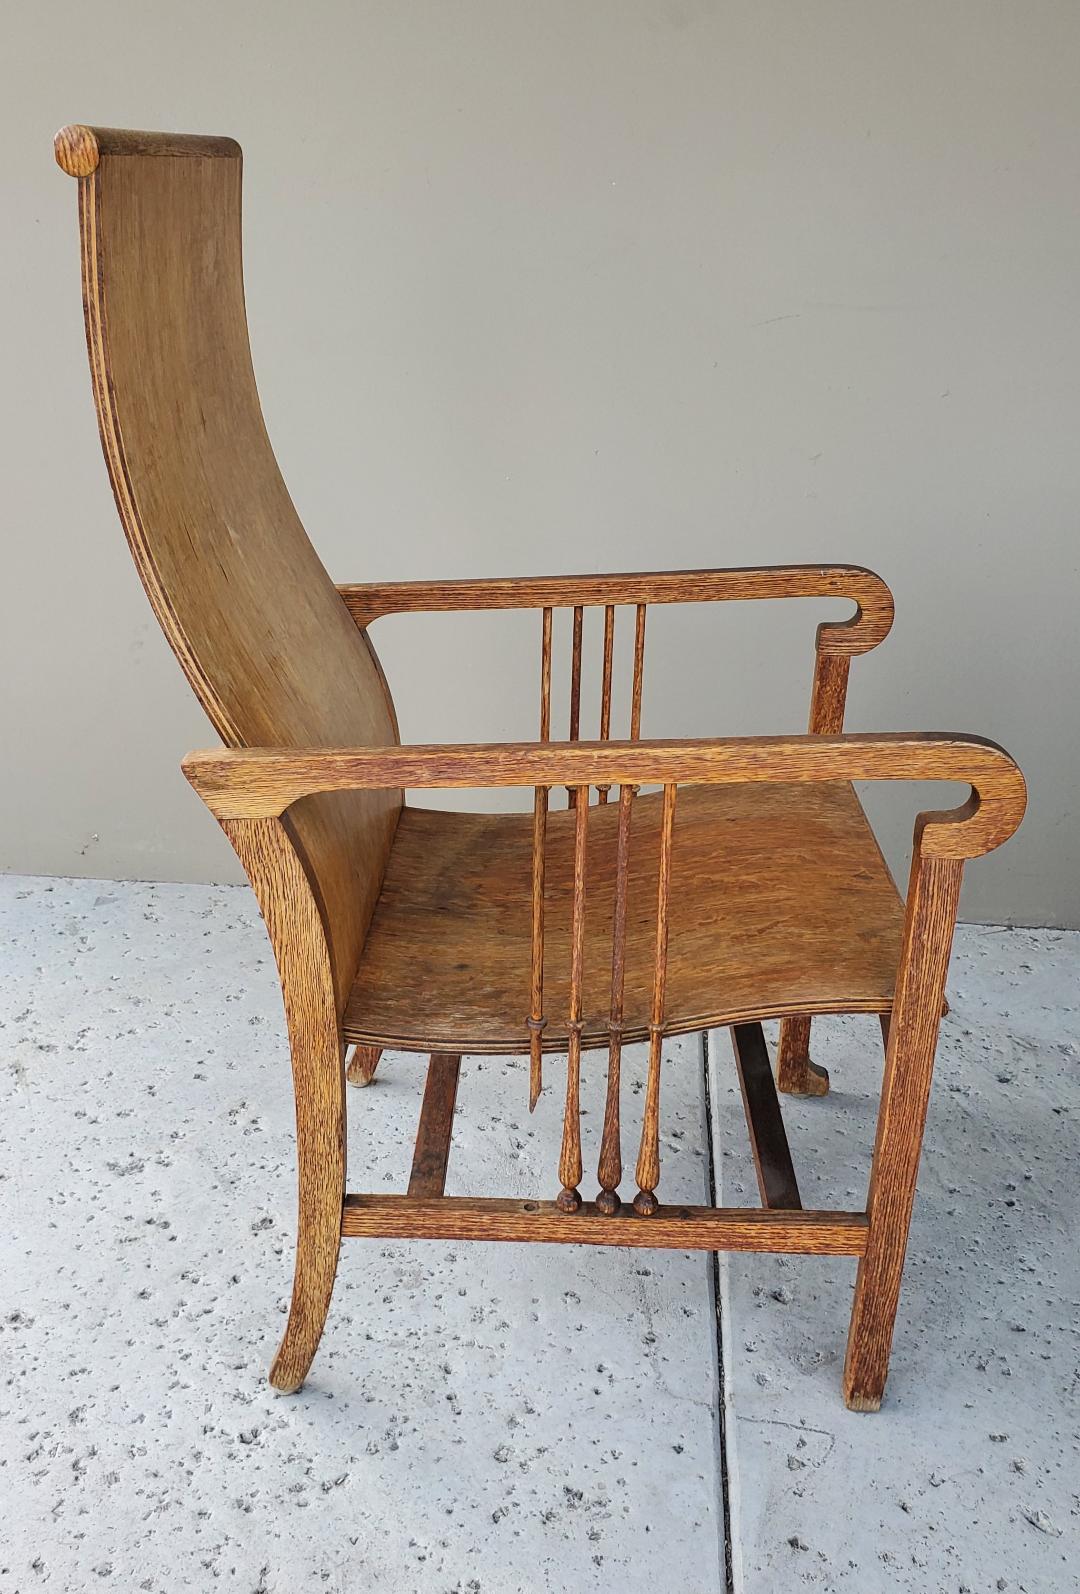 Antique Mission Arts & Crafts Craftsman Quarter Sawn Oak Tall Back Resting Chair For Sale 13